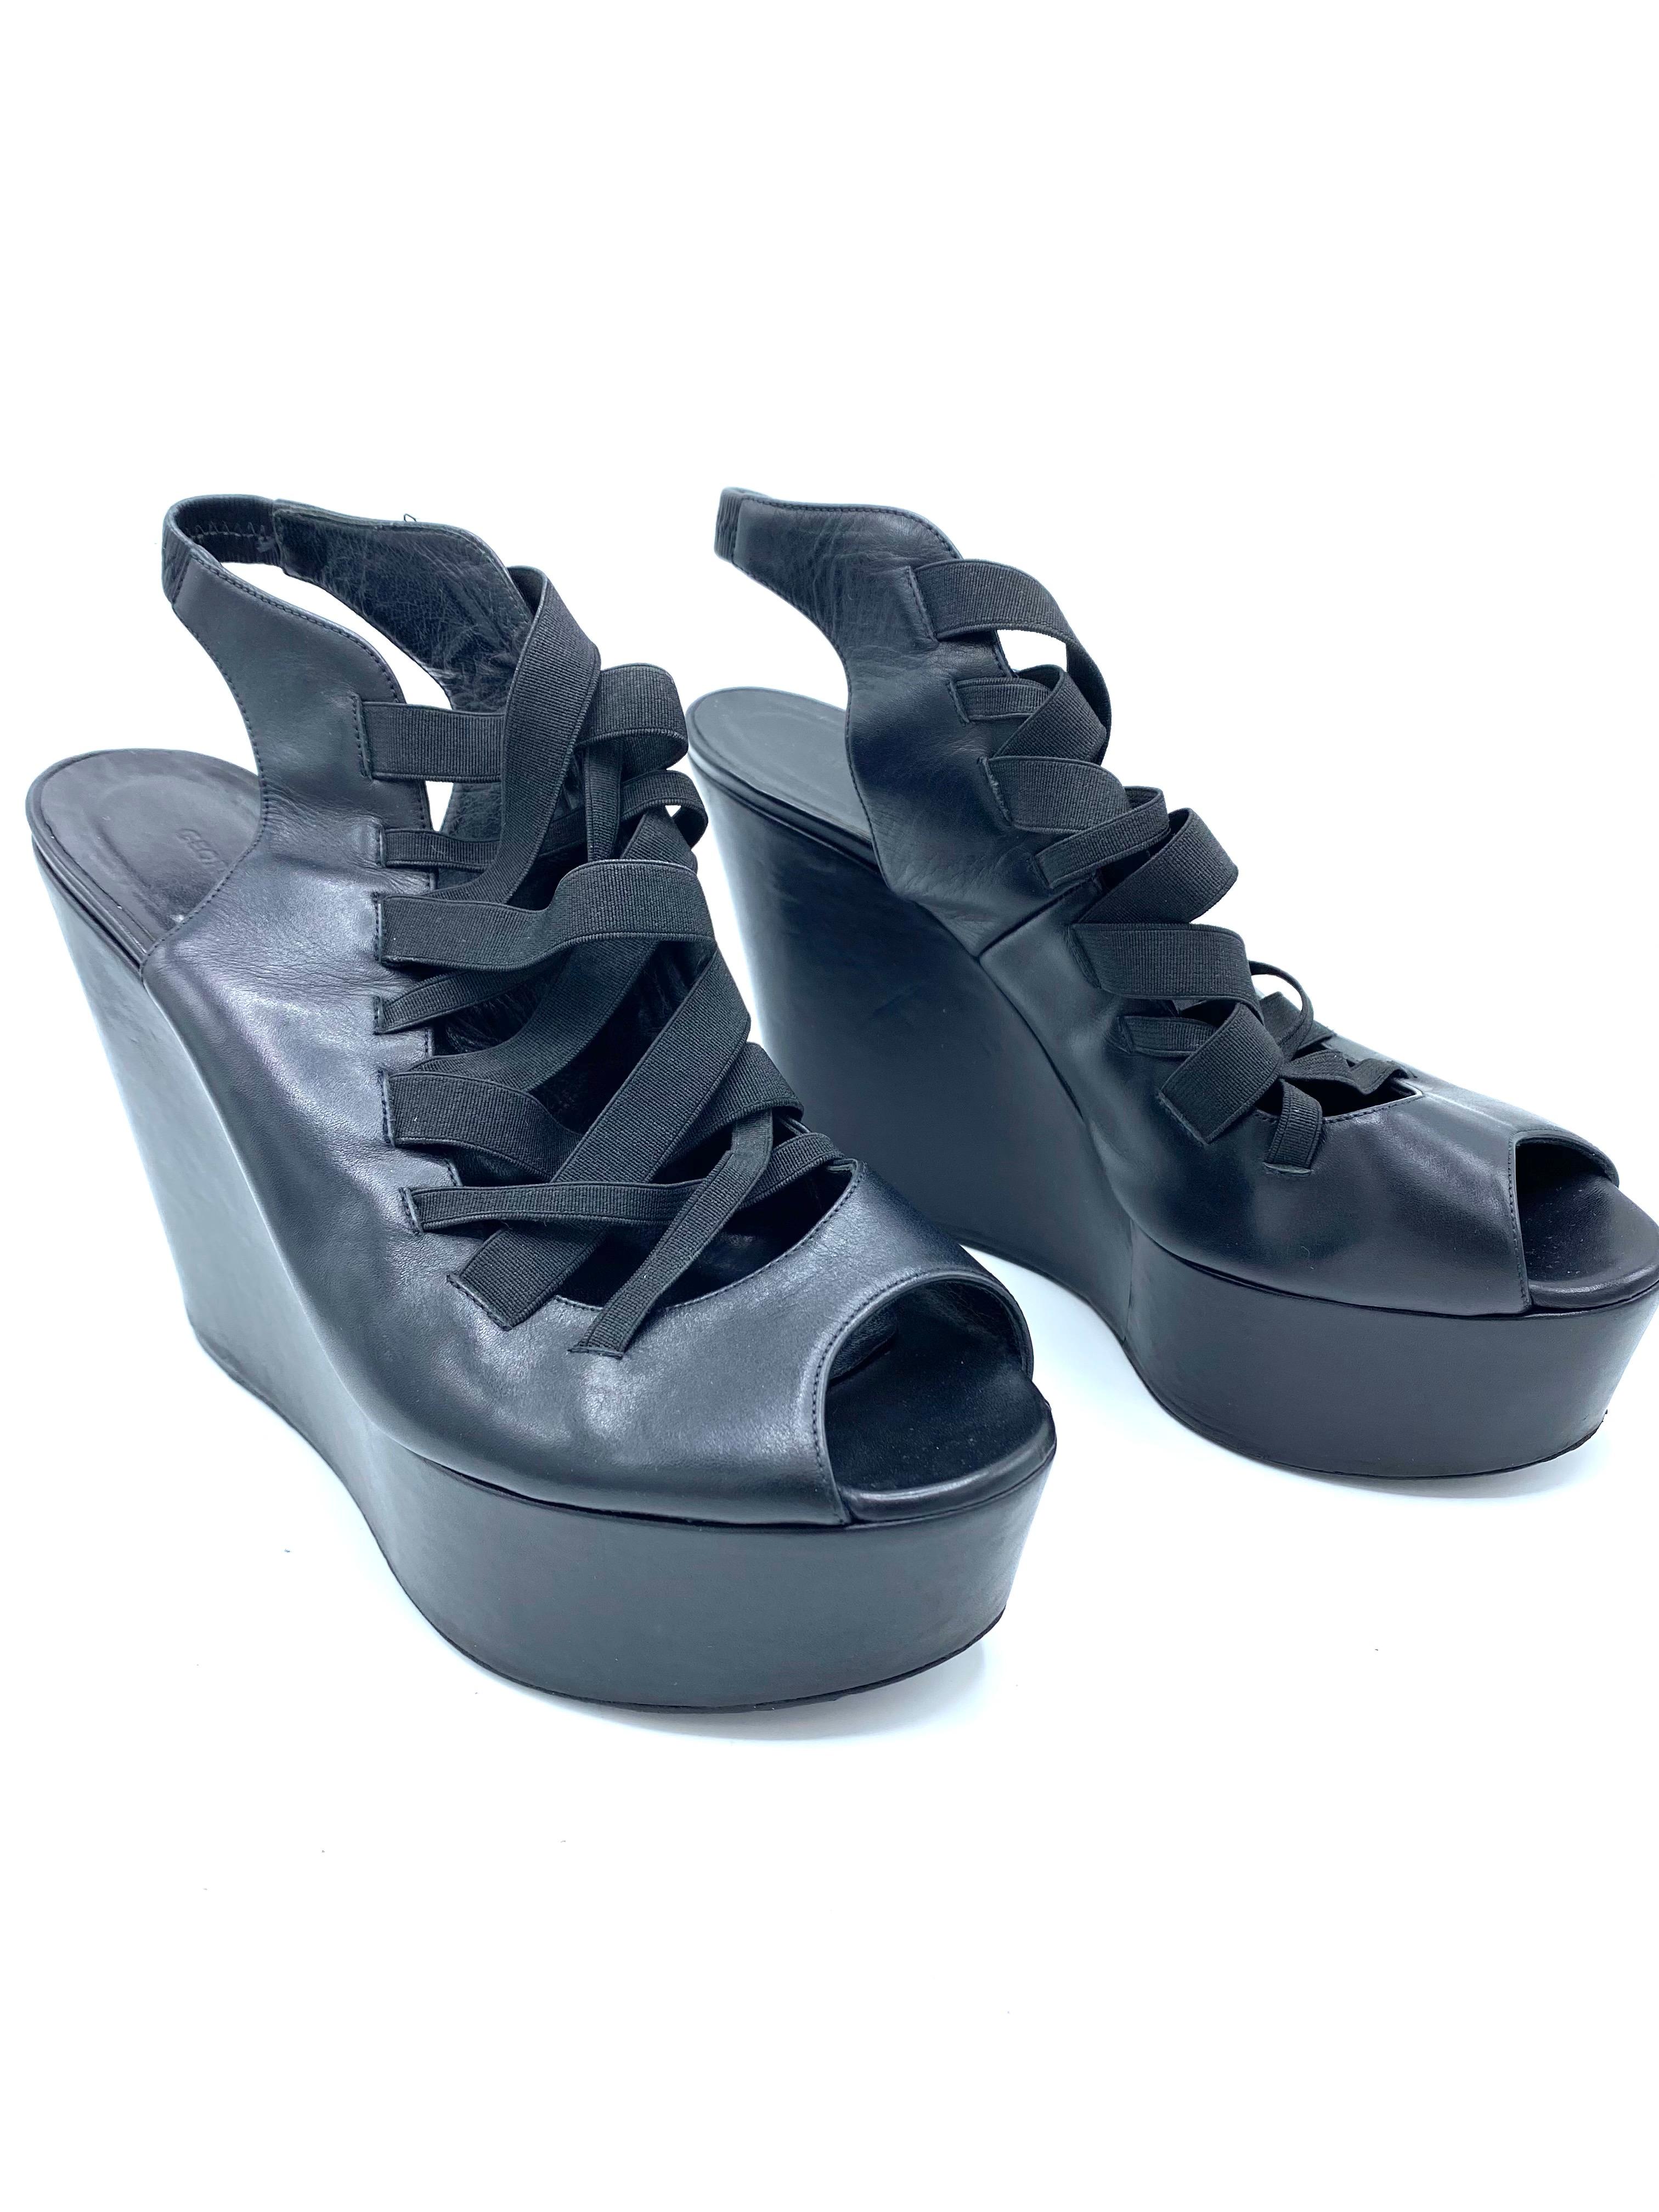 Product details:

The shoes feature black leather, open toe, the platform measures 5